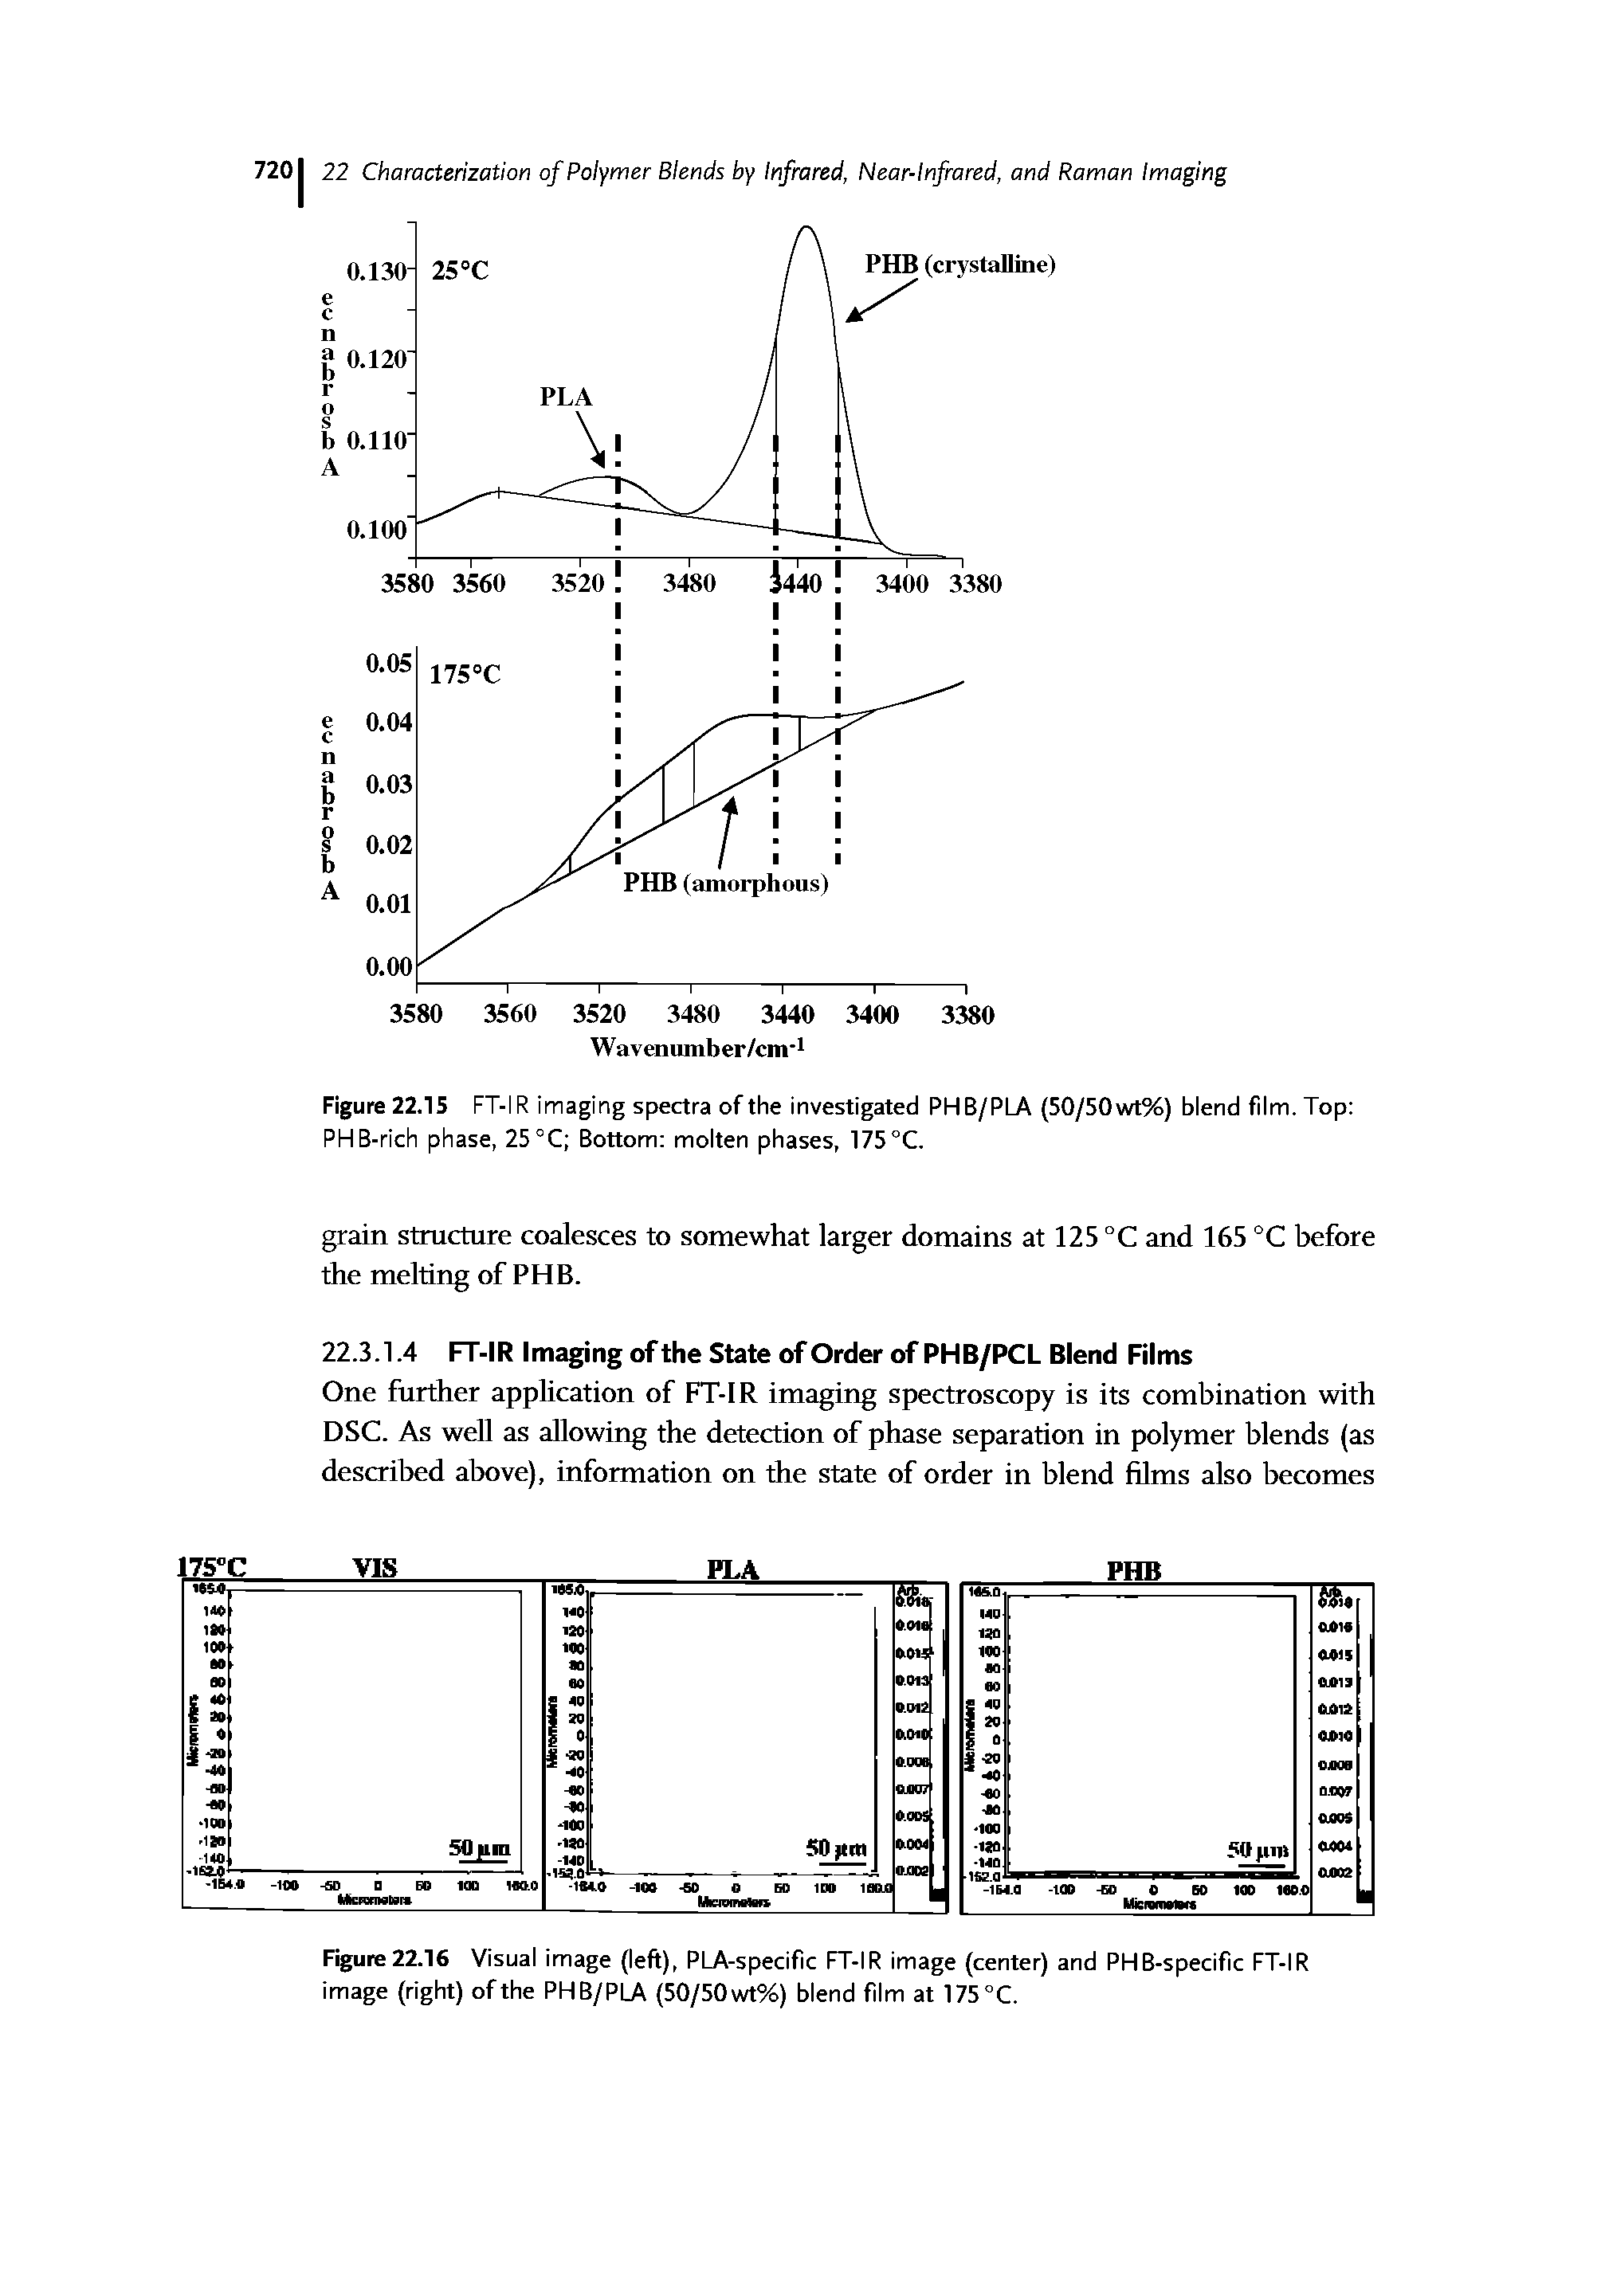 Figure22.16 Visual image (left), PLA-specific FT-IR image (center) and PHB-specific FT-IR image (right) of the PHB/PLA (50/50wt%) blend film at 175°C.